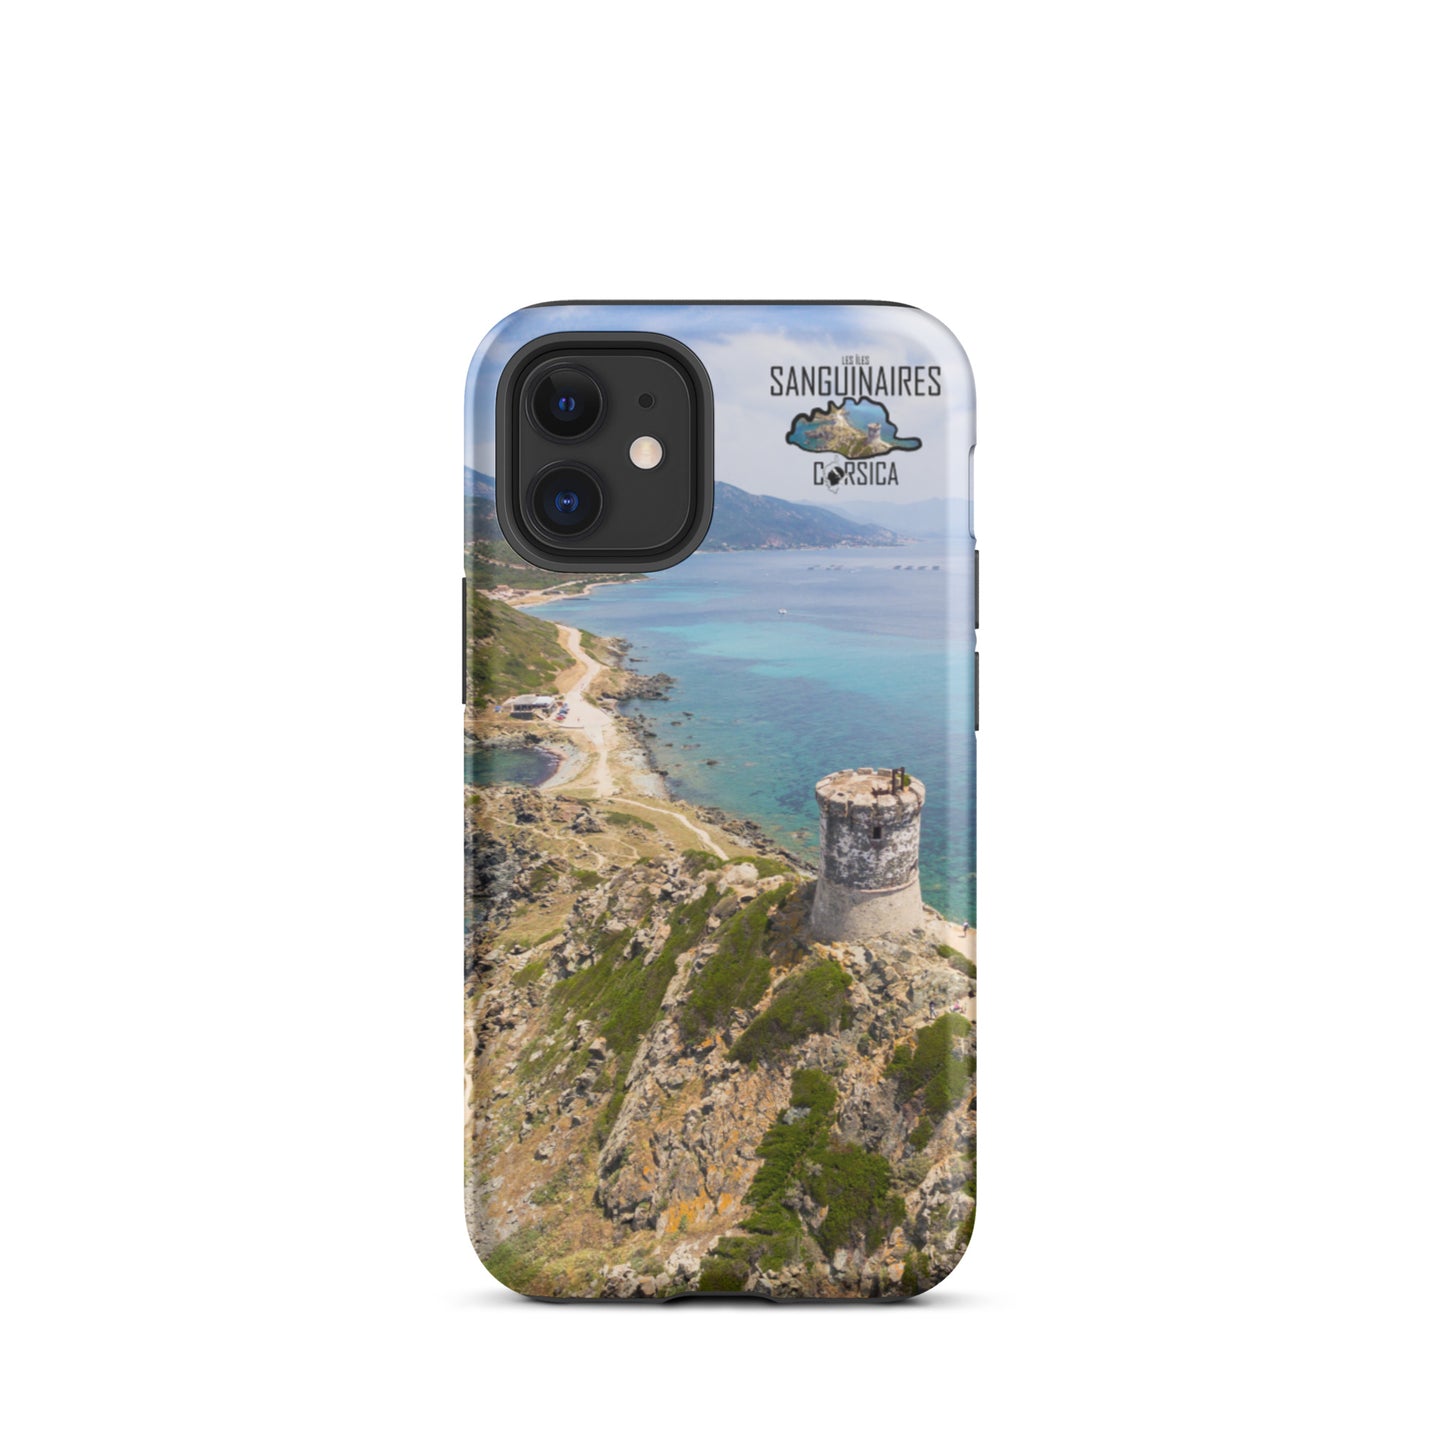 Coque d'iPhone rigide Les Sanguinaires Corsica